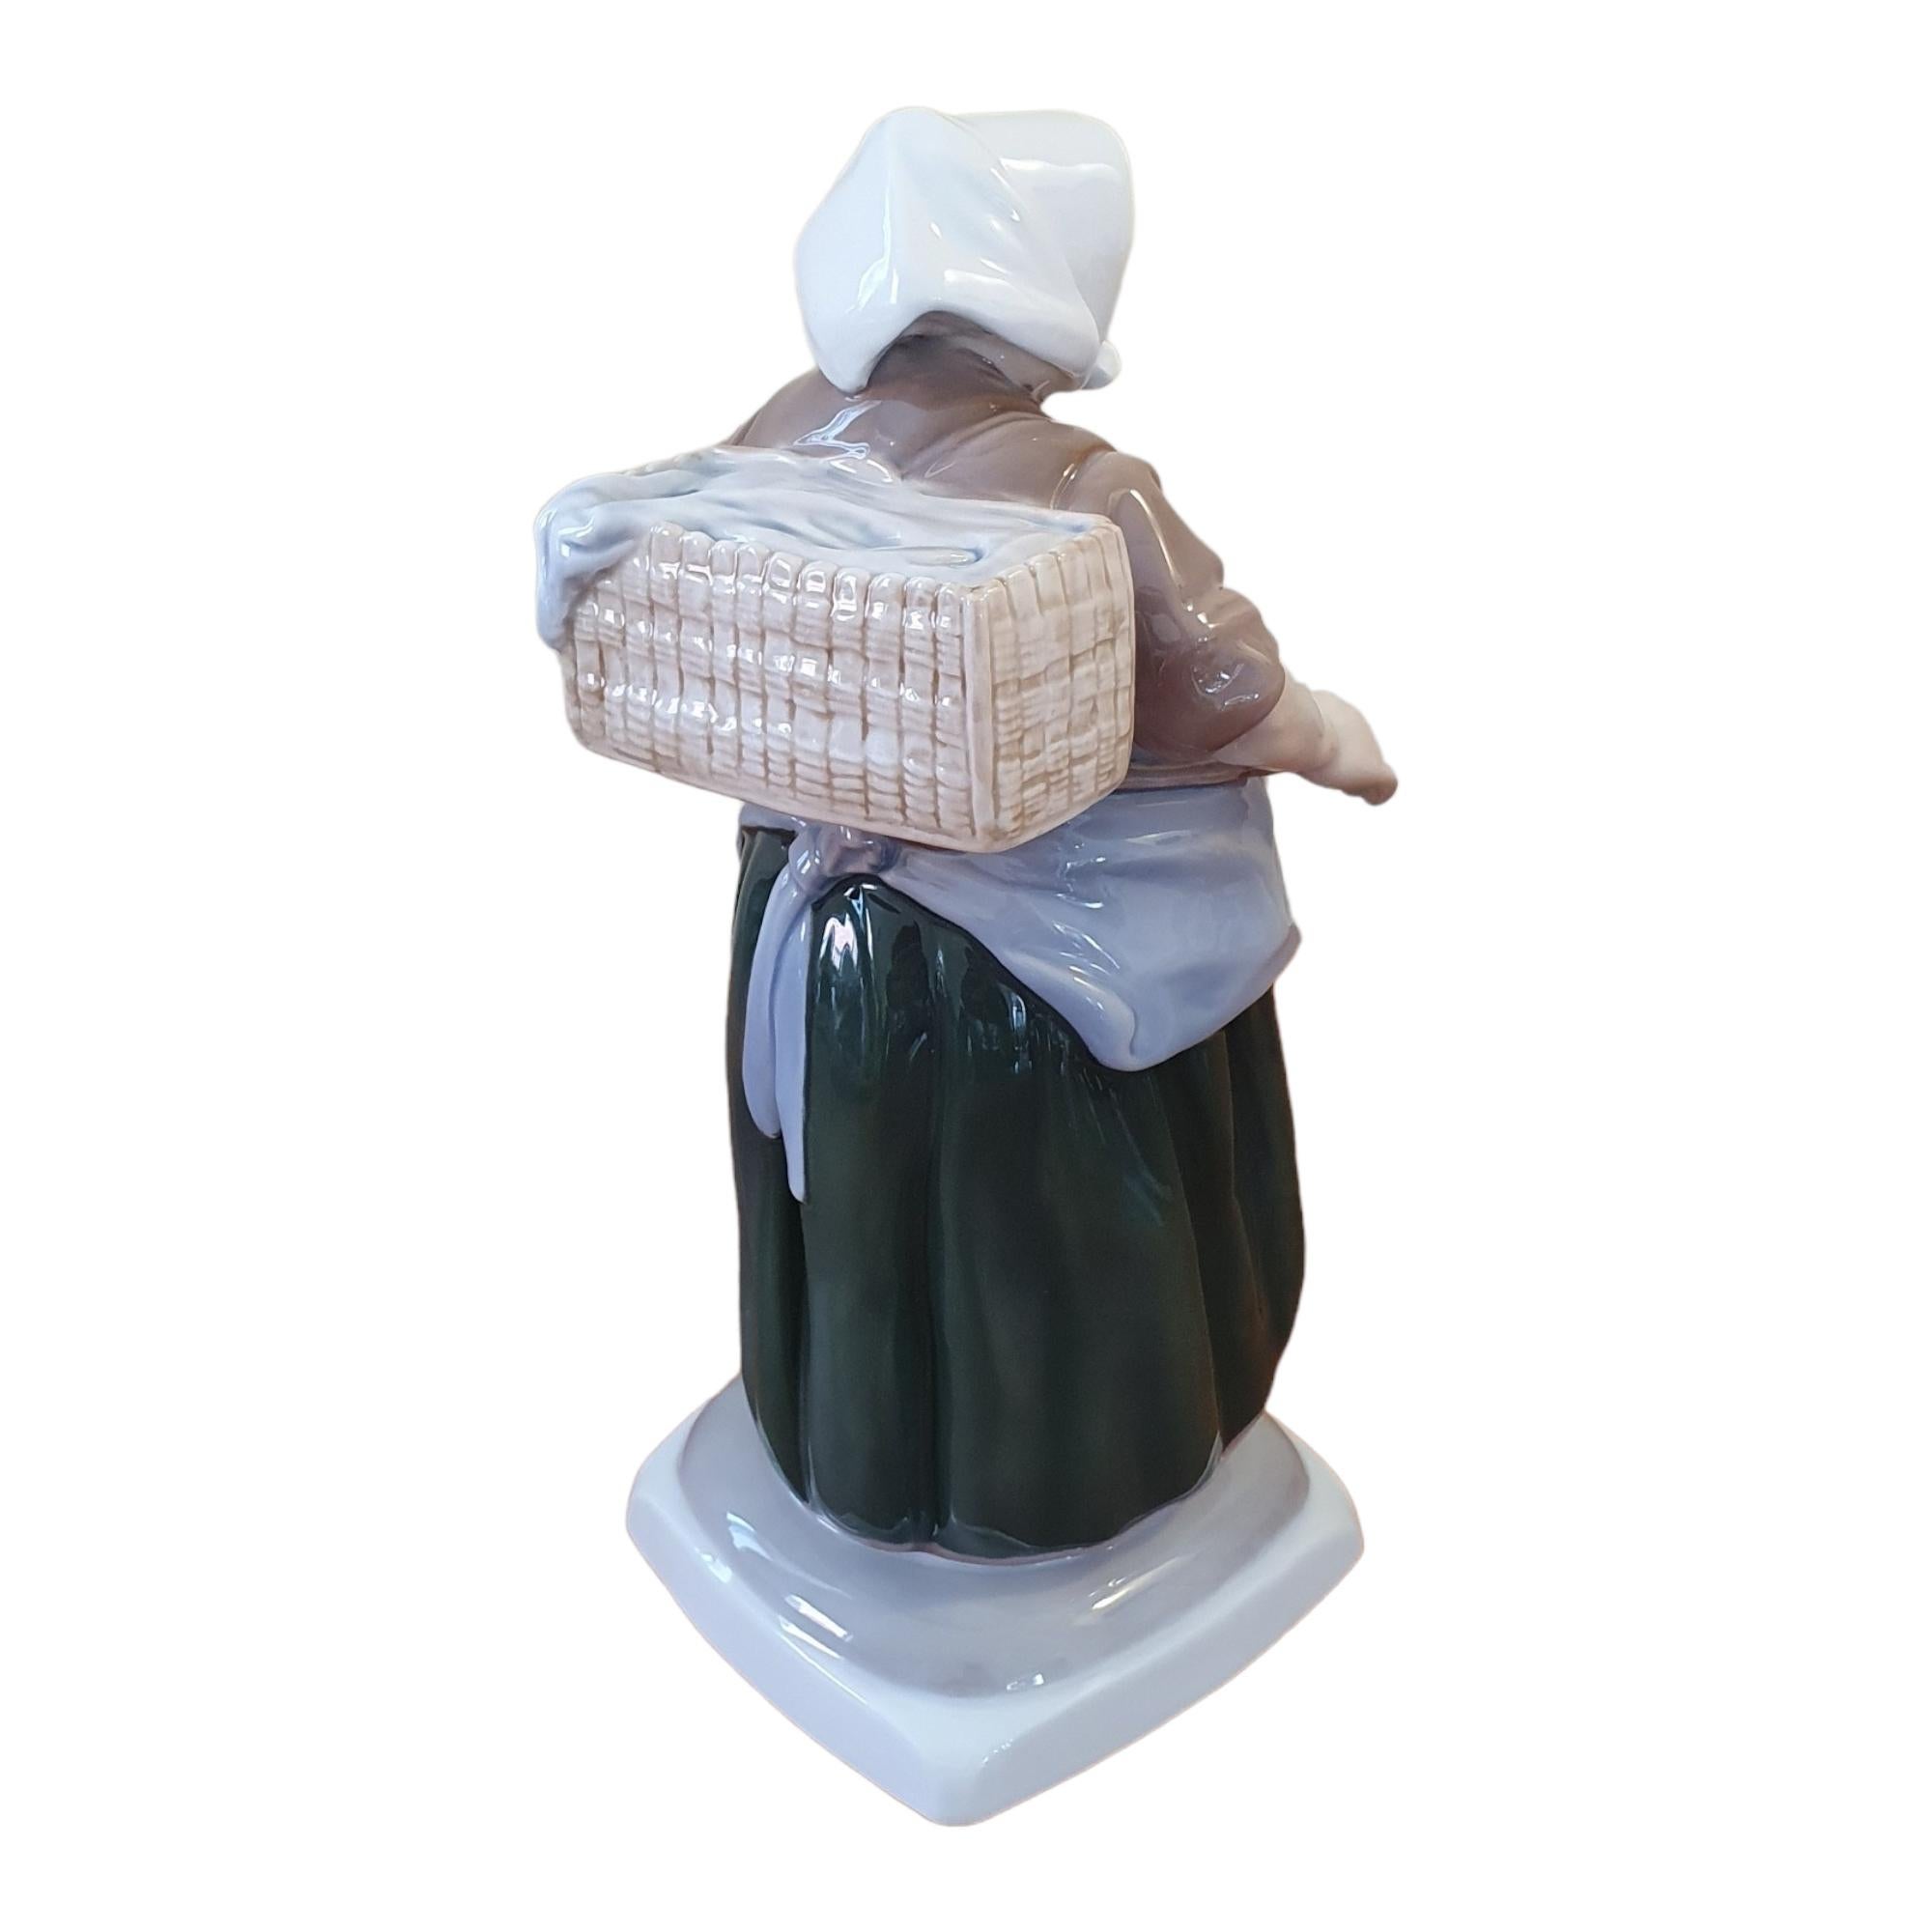 20th century glazed Porcelain Fishermans Wife figurine In Good Condition For Sale In Brønshøj, DK